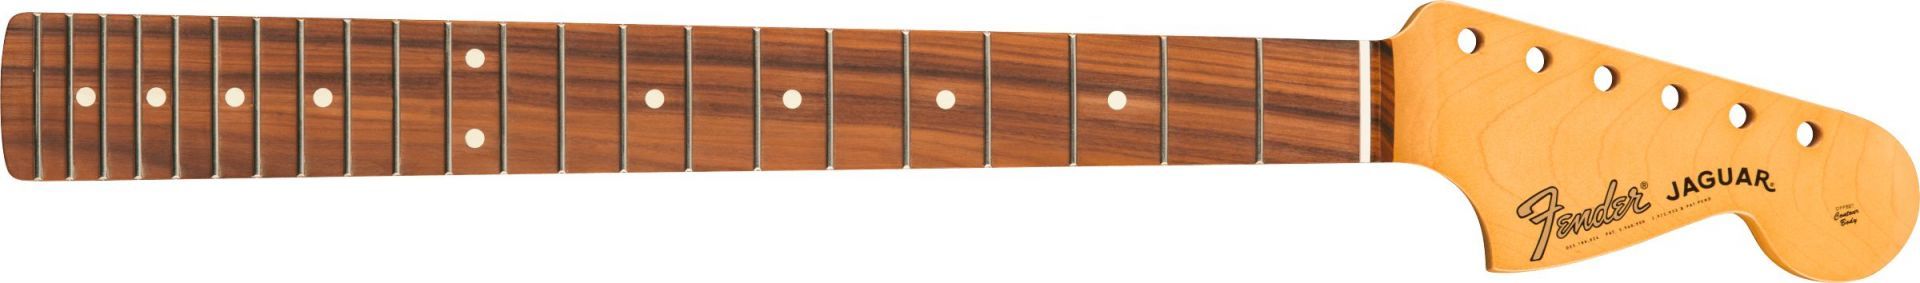 Fender Classic Player Jaguar Neck 22 Med Jumbo Frets Pau Ferro C Shape